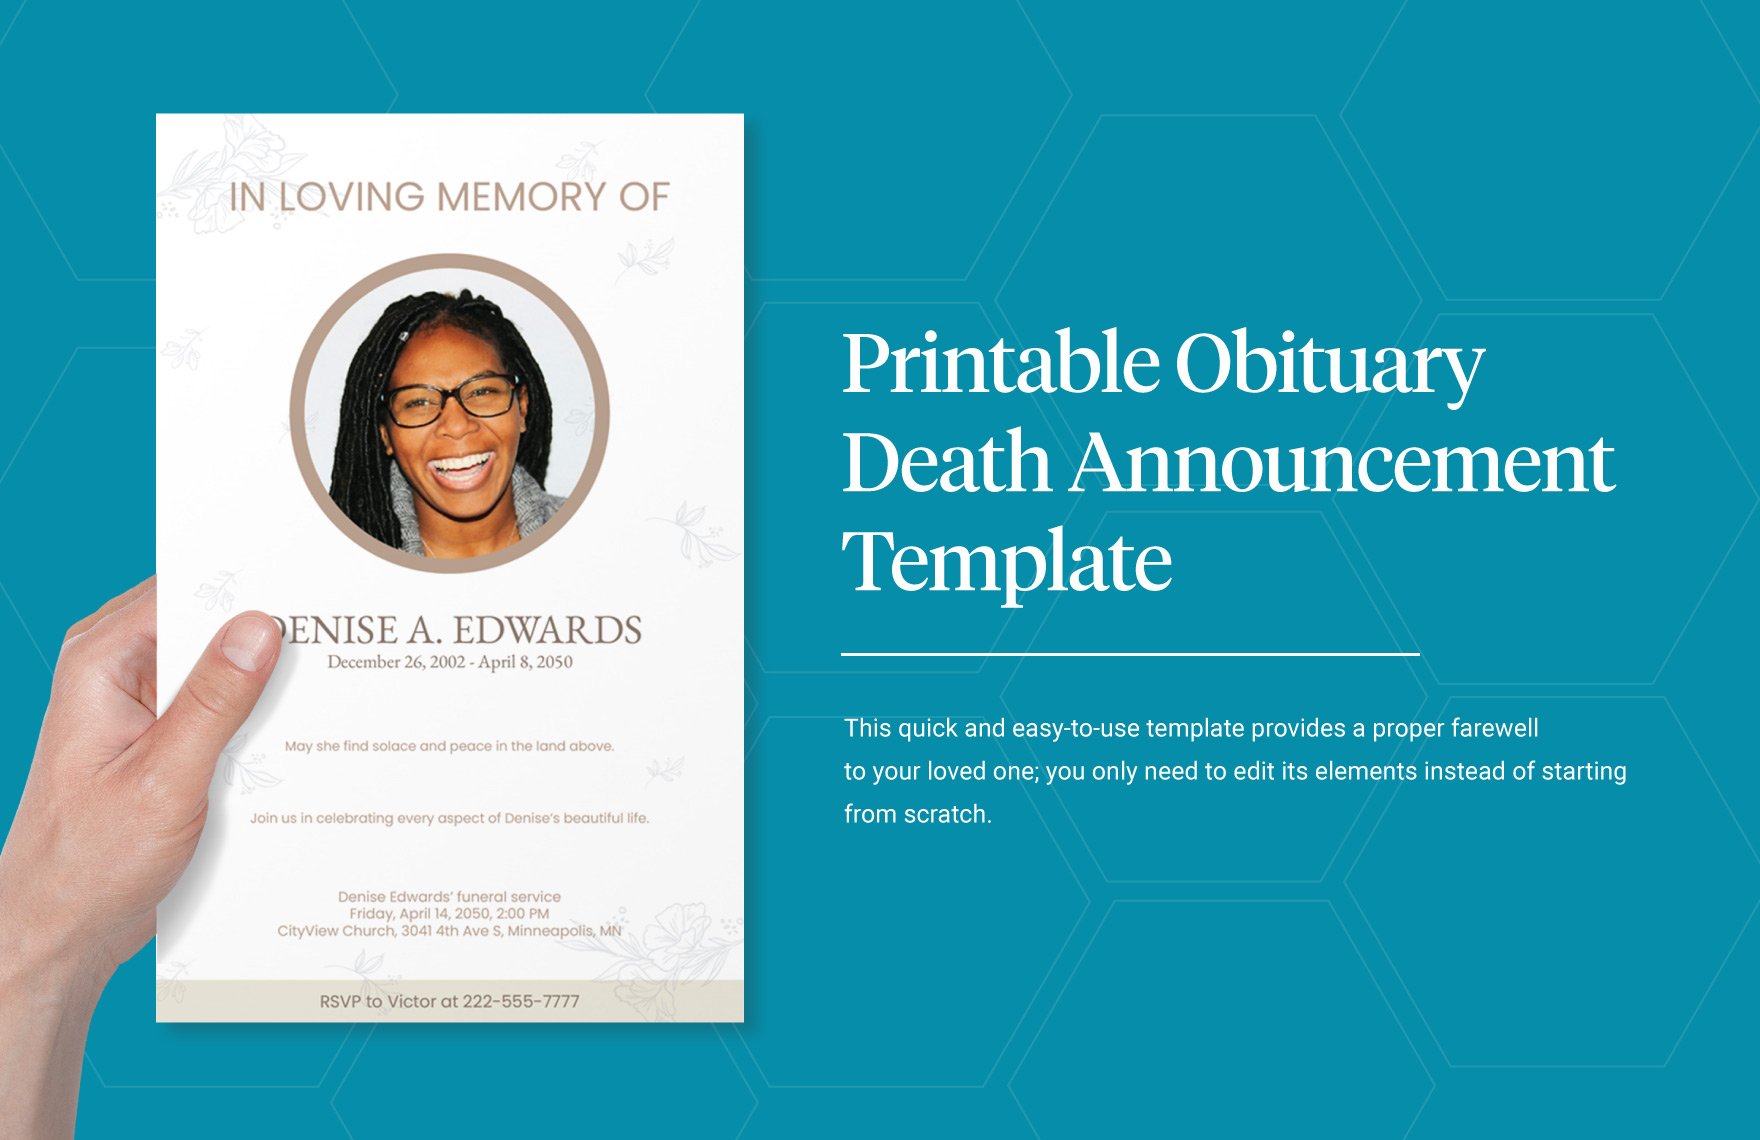 Printable Obituary Death Announcement Template